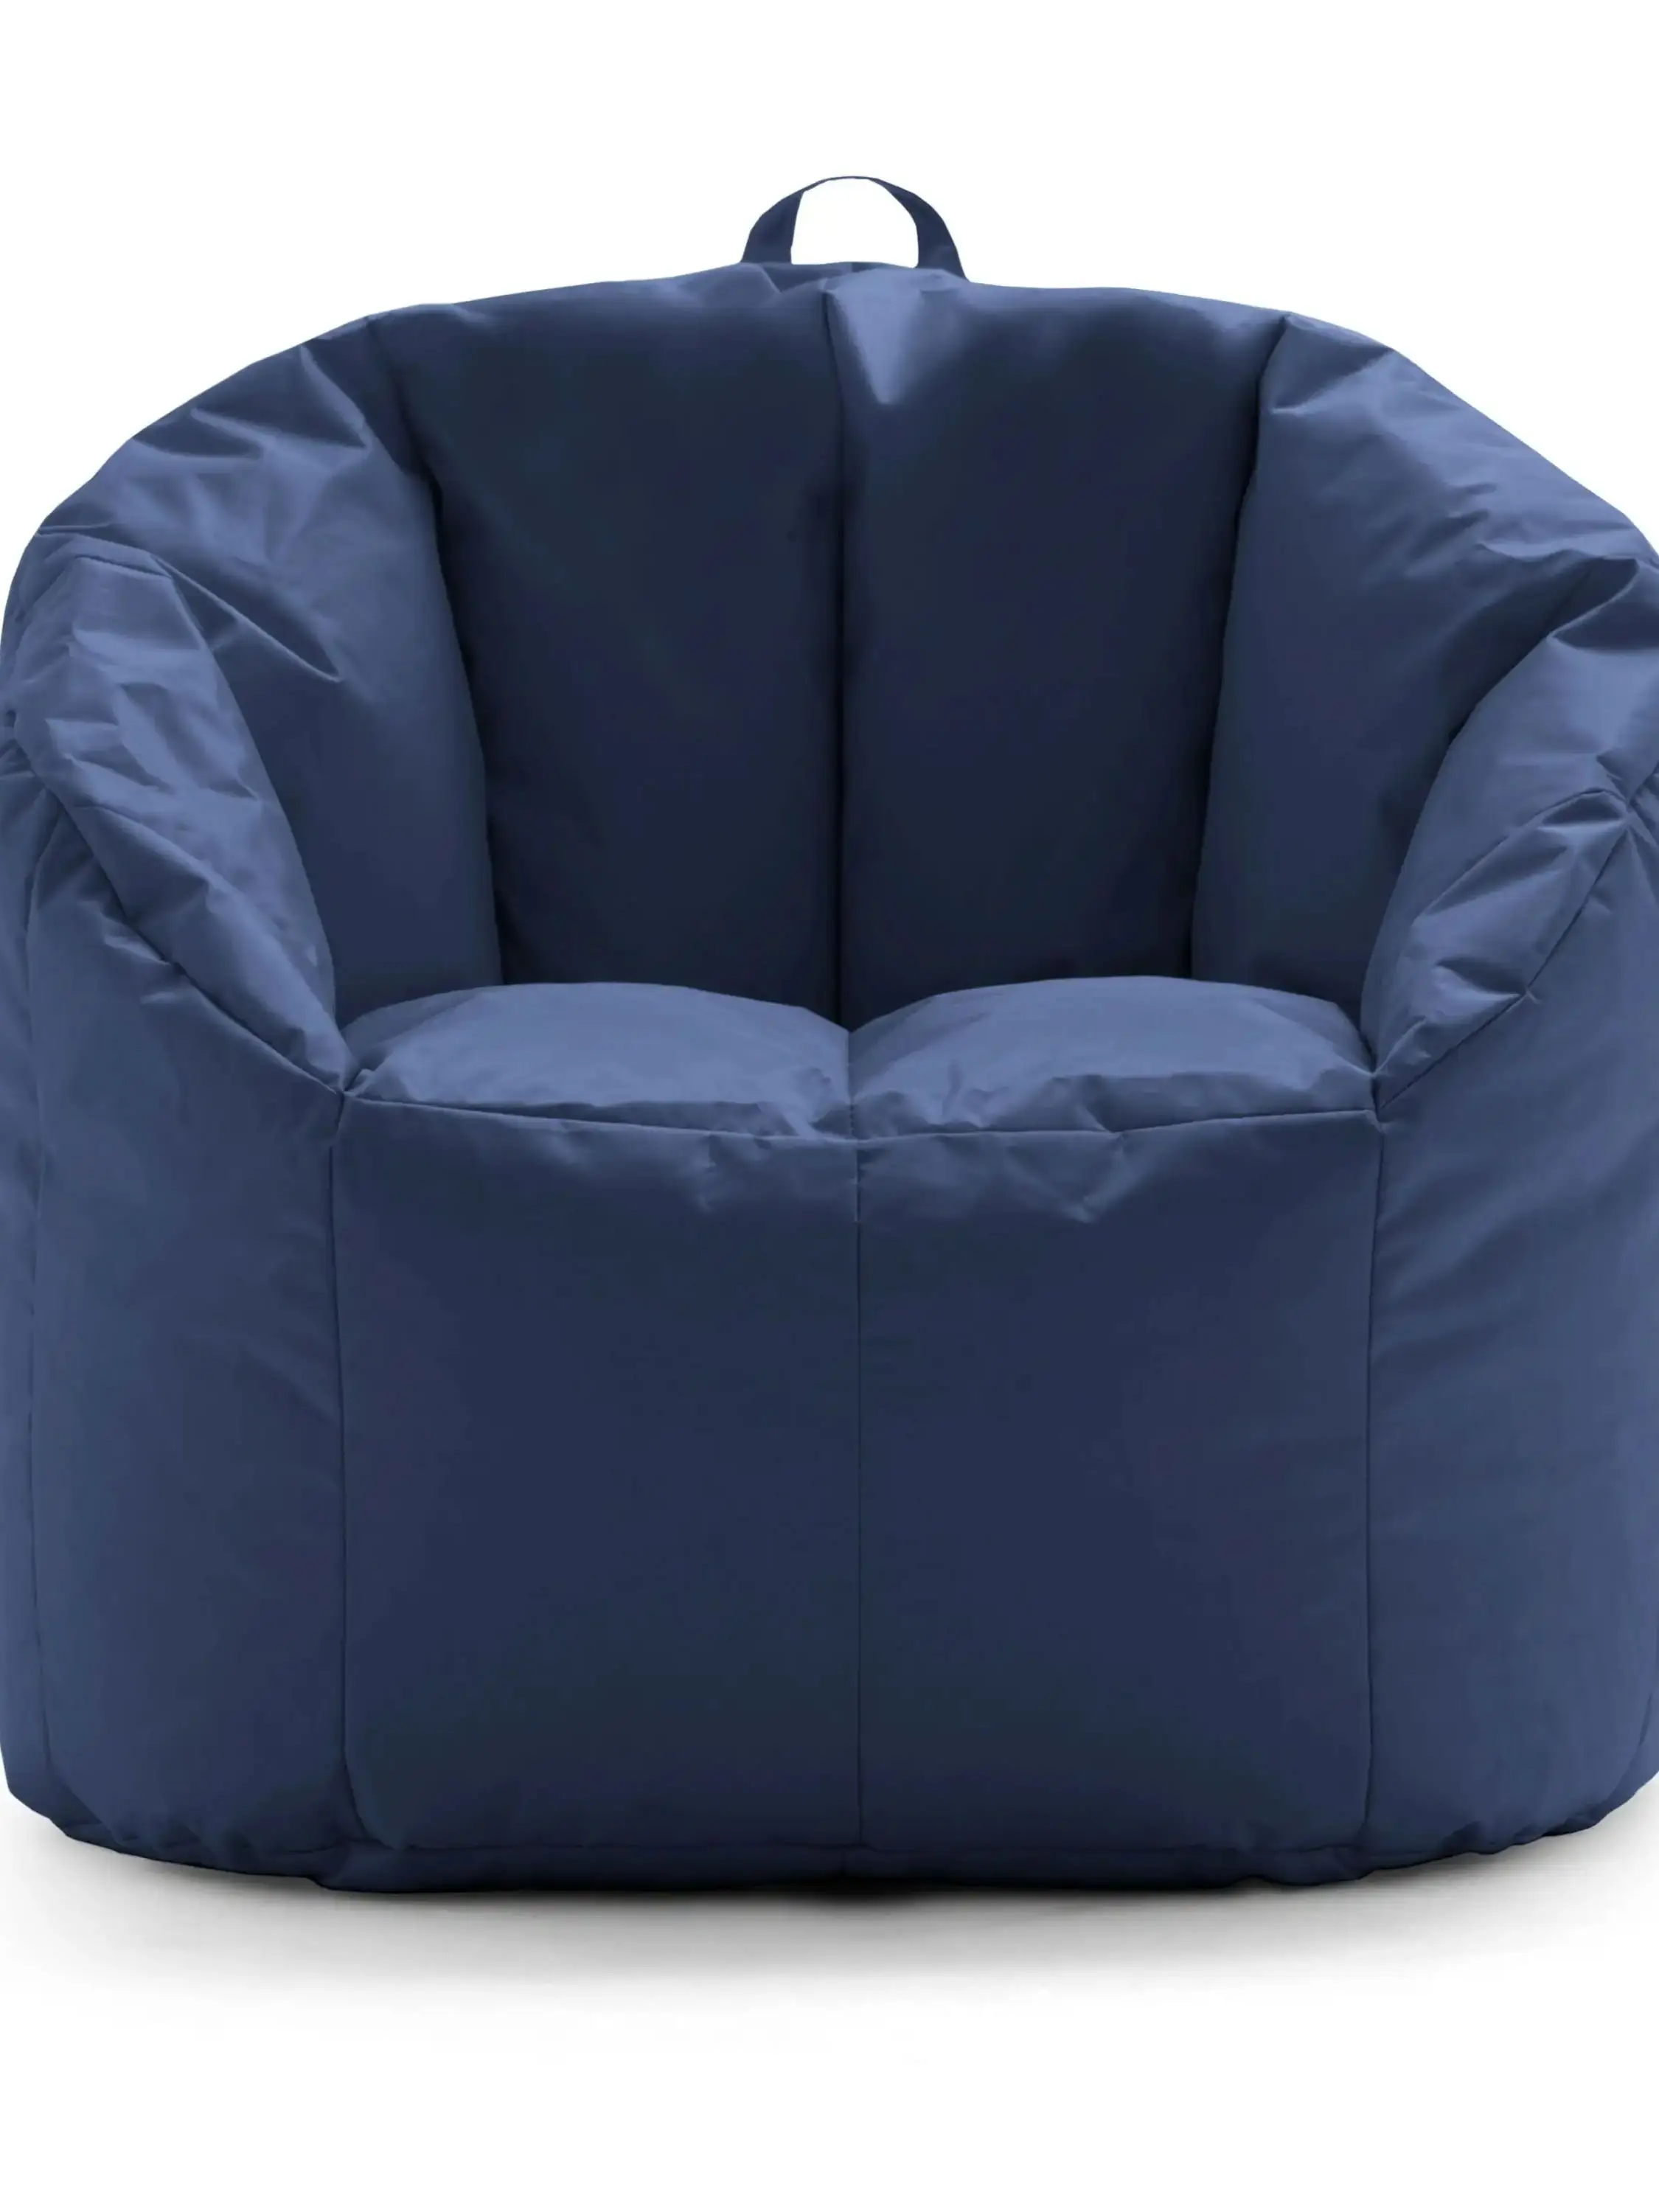 

Big Joe Milano Bean Bag Chair, Smartmax 2.5ft, Navy